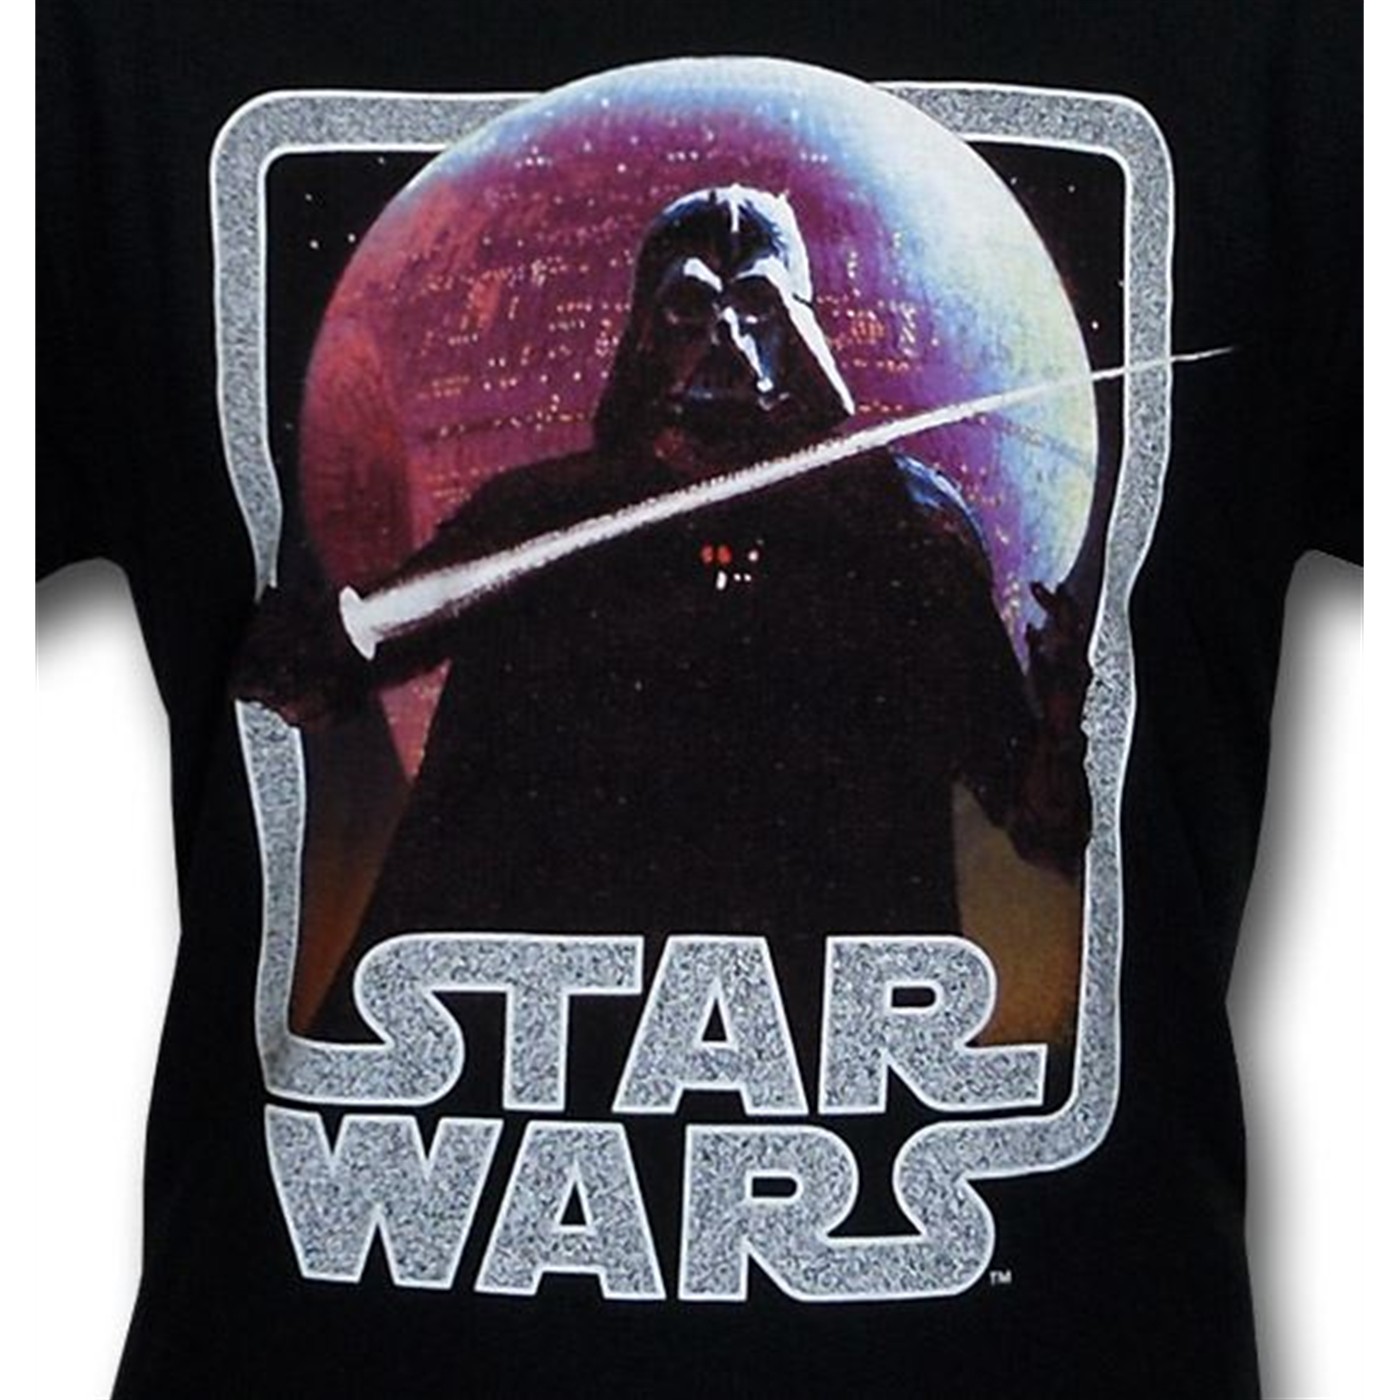 Star Wars Darth Vader by Ralph McQuarrie T-Shirt